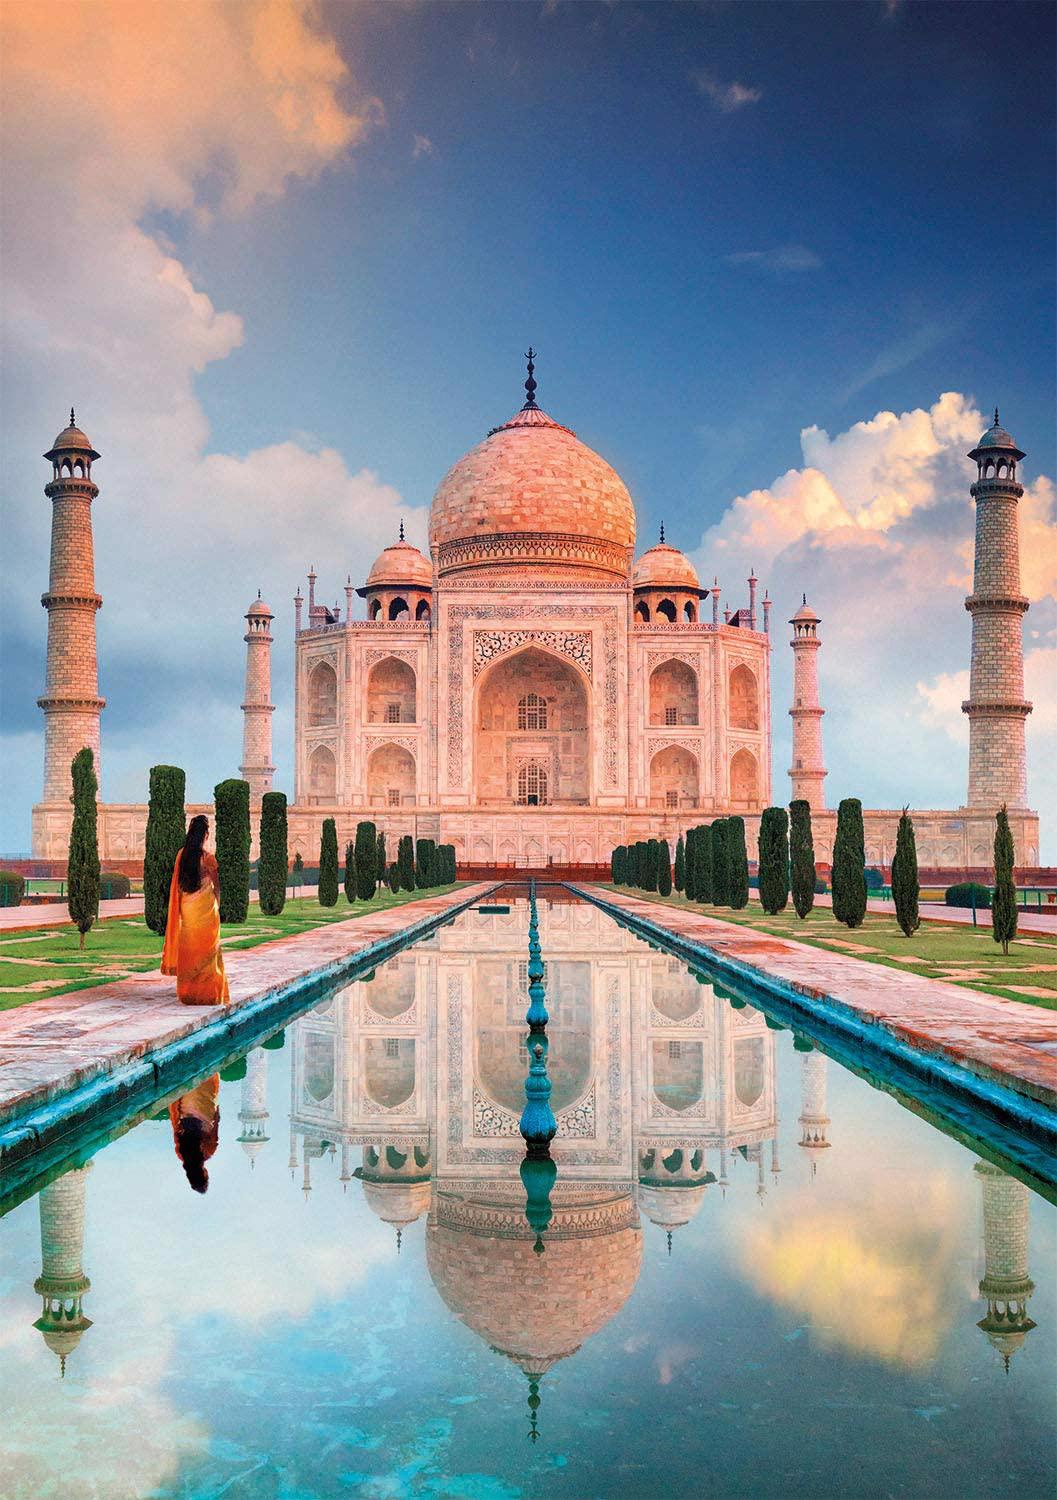 Puzzle Taj Mahal 1500